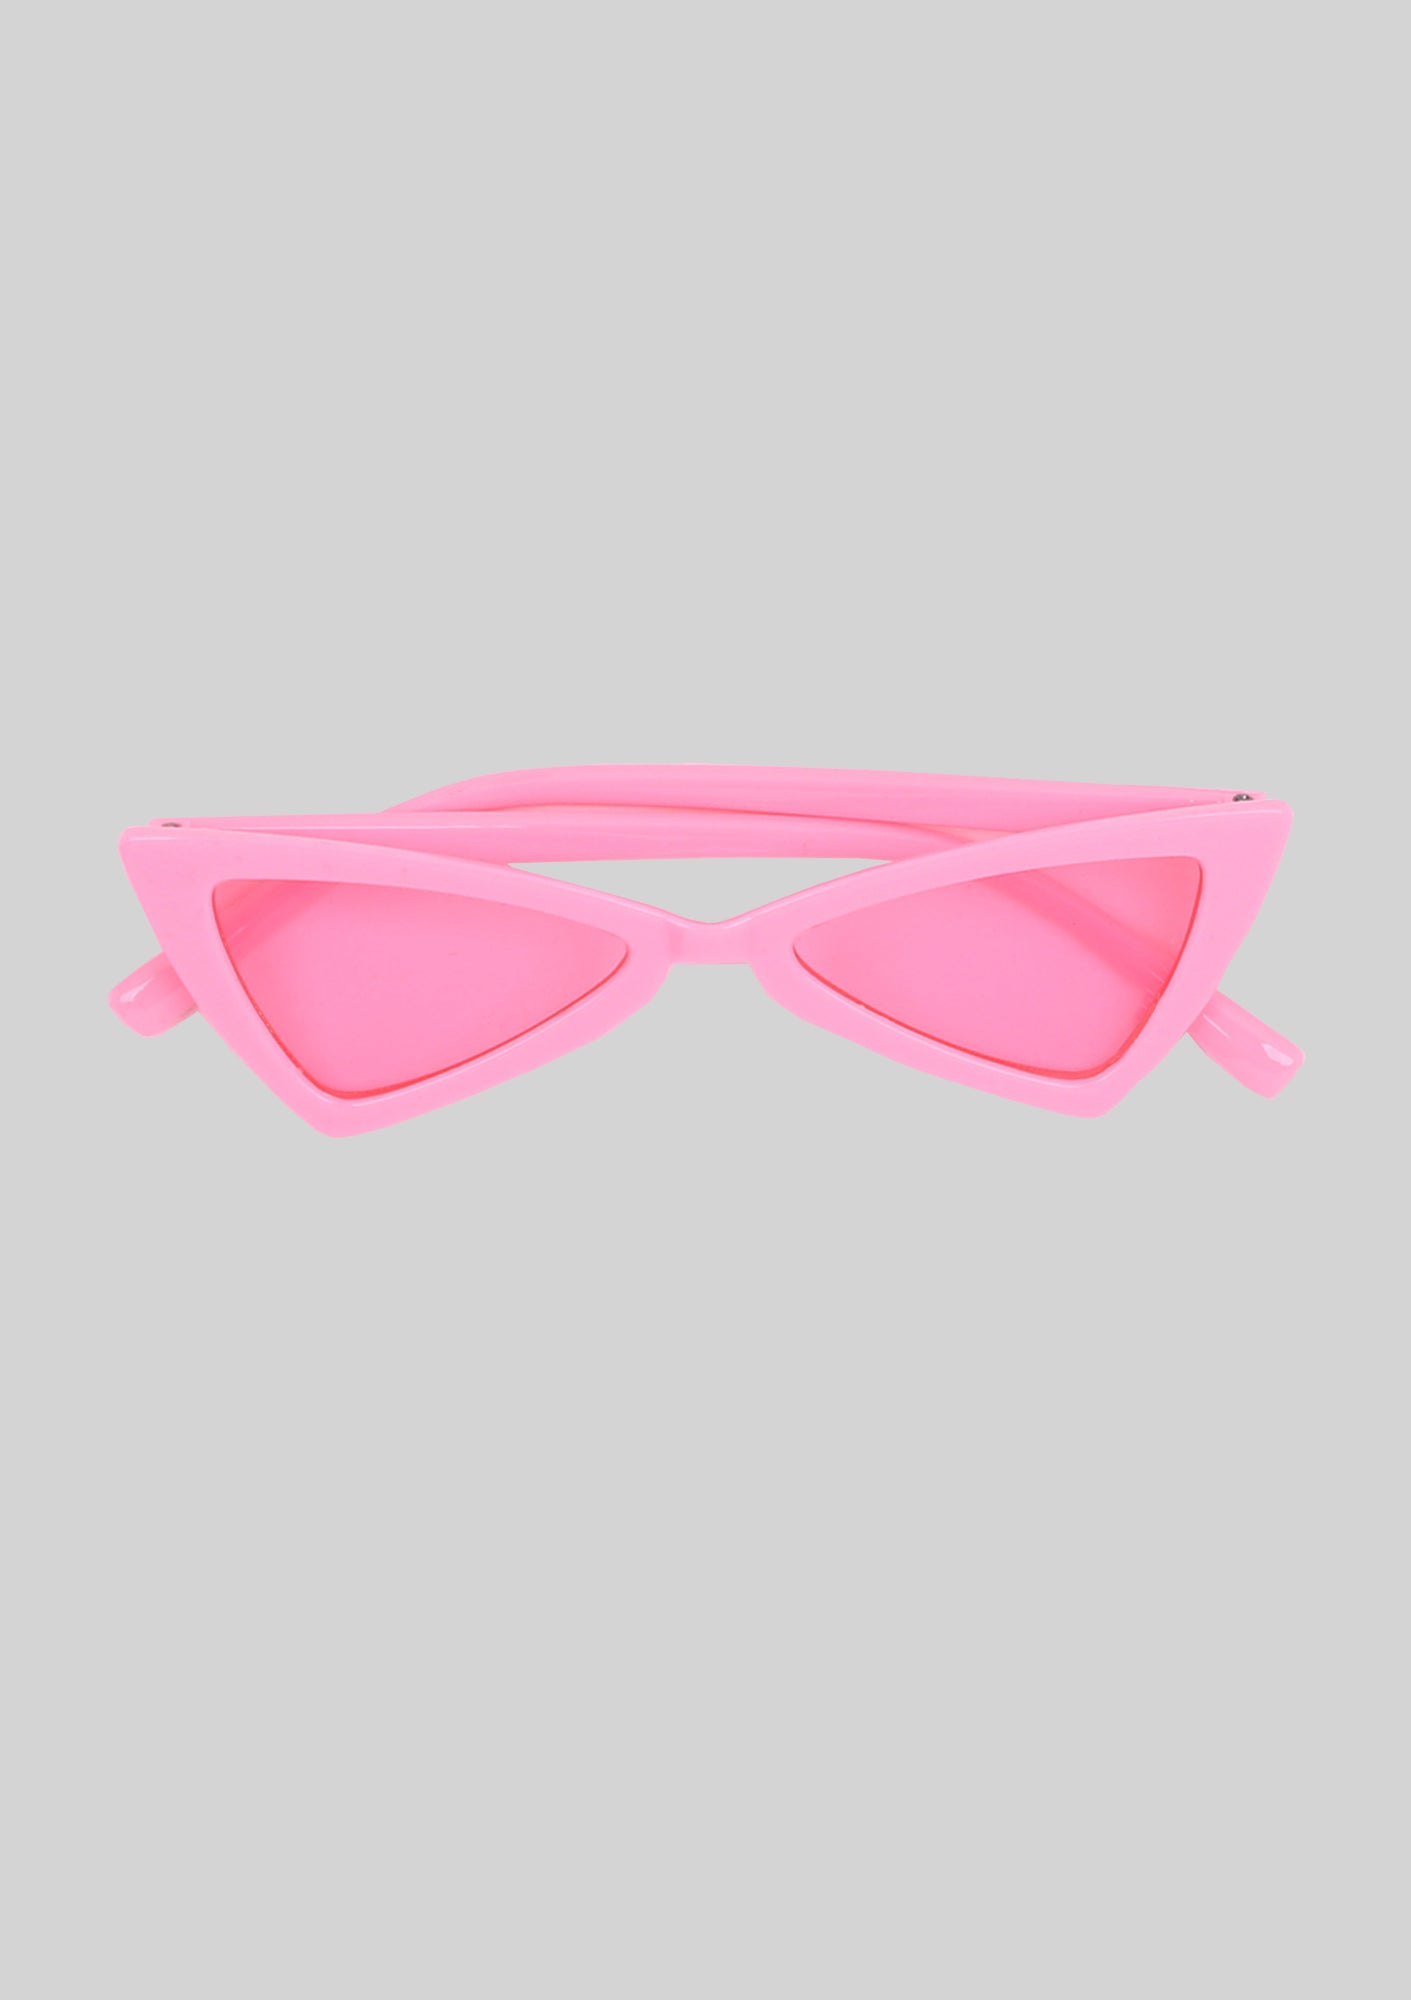 Pink Triangular Sunglasses